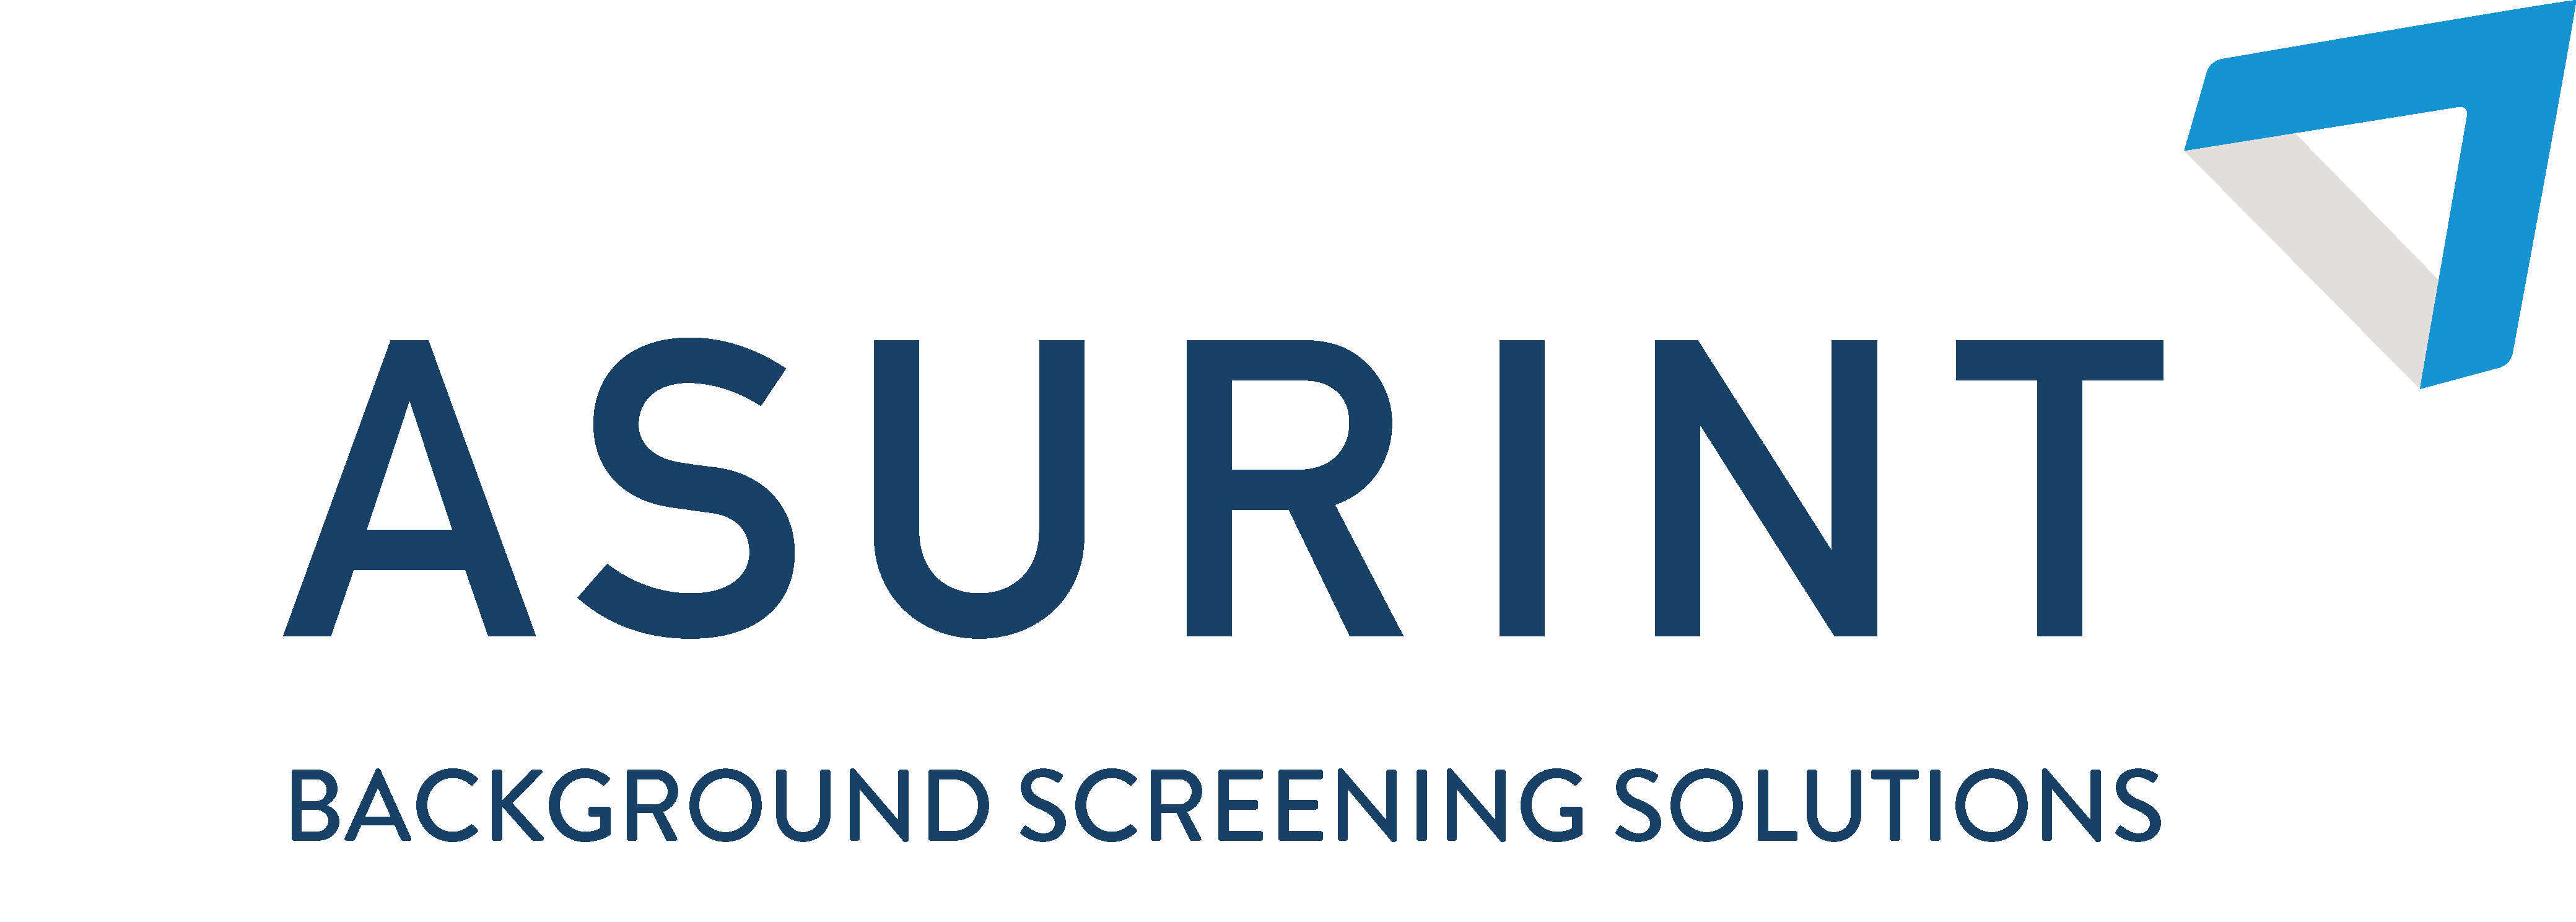 Asurint Logo 3 Color - BG Screening Solutions.png